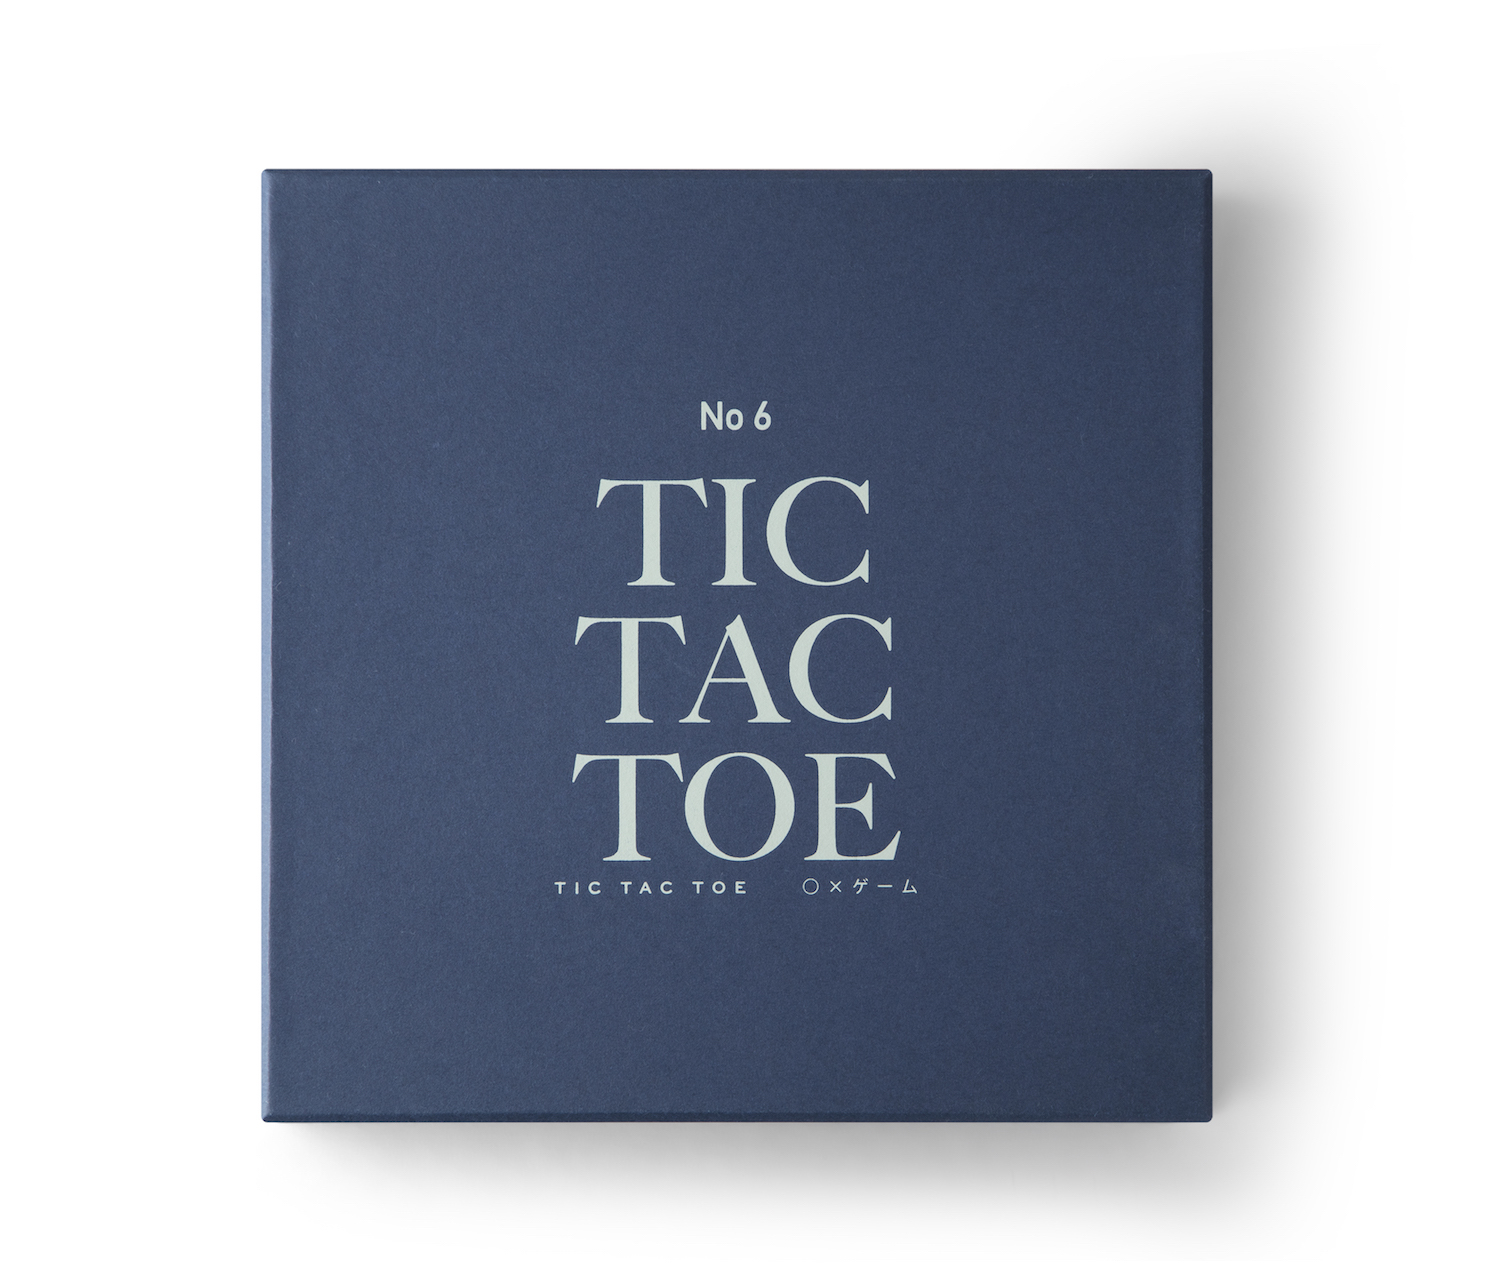 TIC-TAC-TOE 1600 Blanko Spiele: Überall Tic Tac Toe spielen (German Edition)